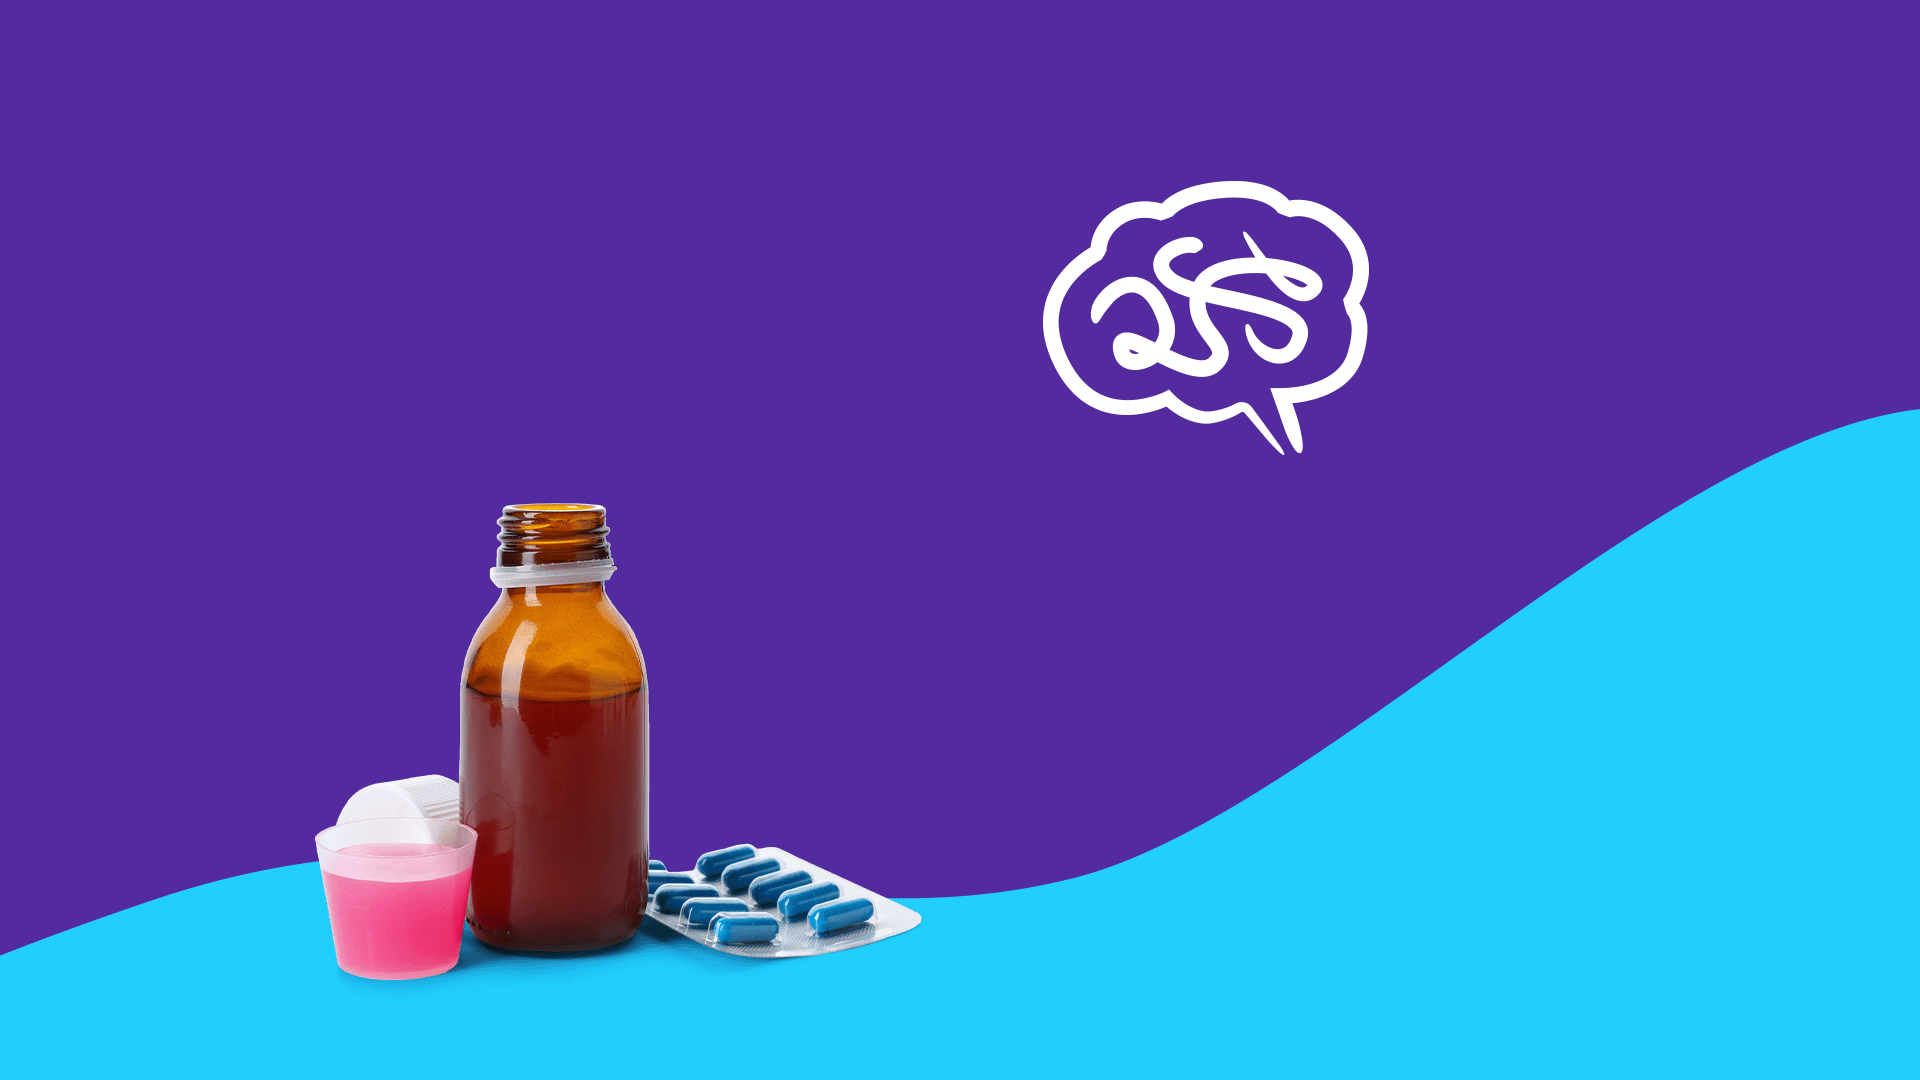 Medicines and a brain illustration — serotonin syndrome symptoms